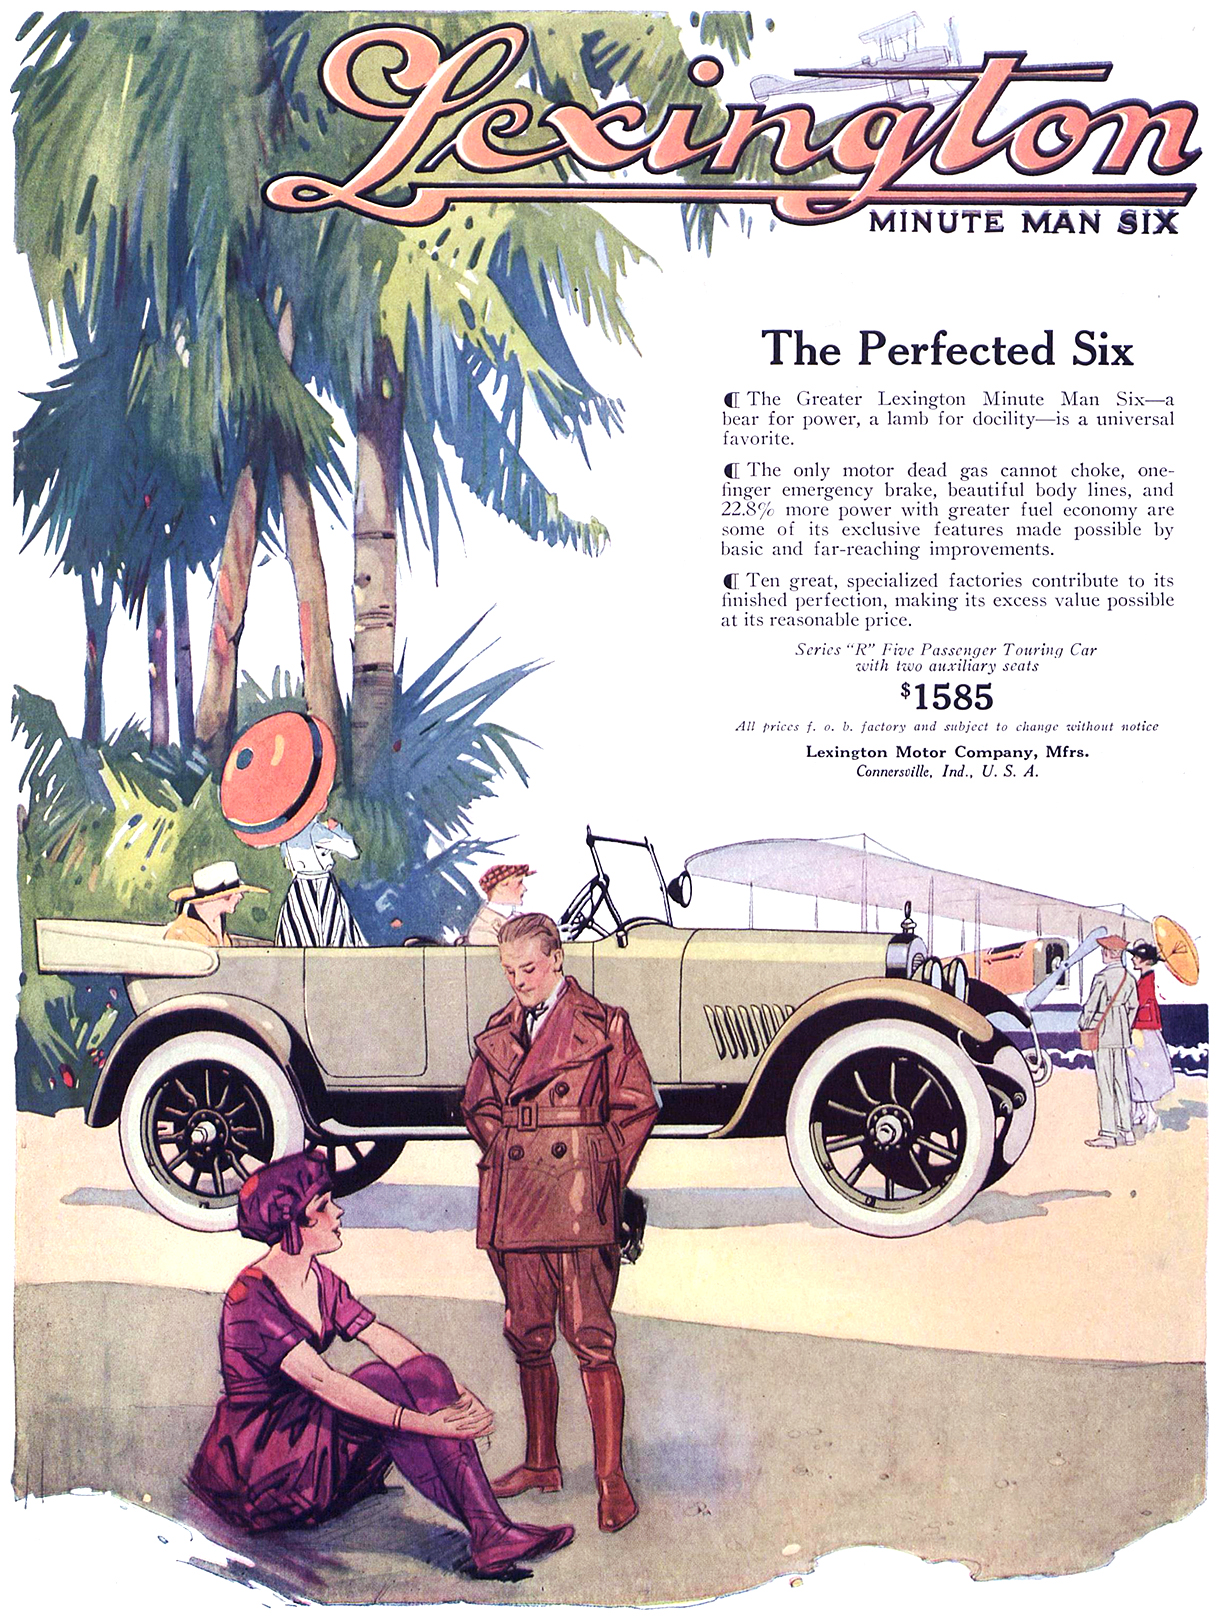 Lexington Minute Man Six Ad (January, 1918): The Perfected Six